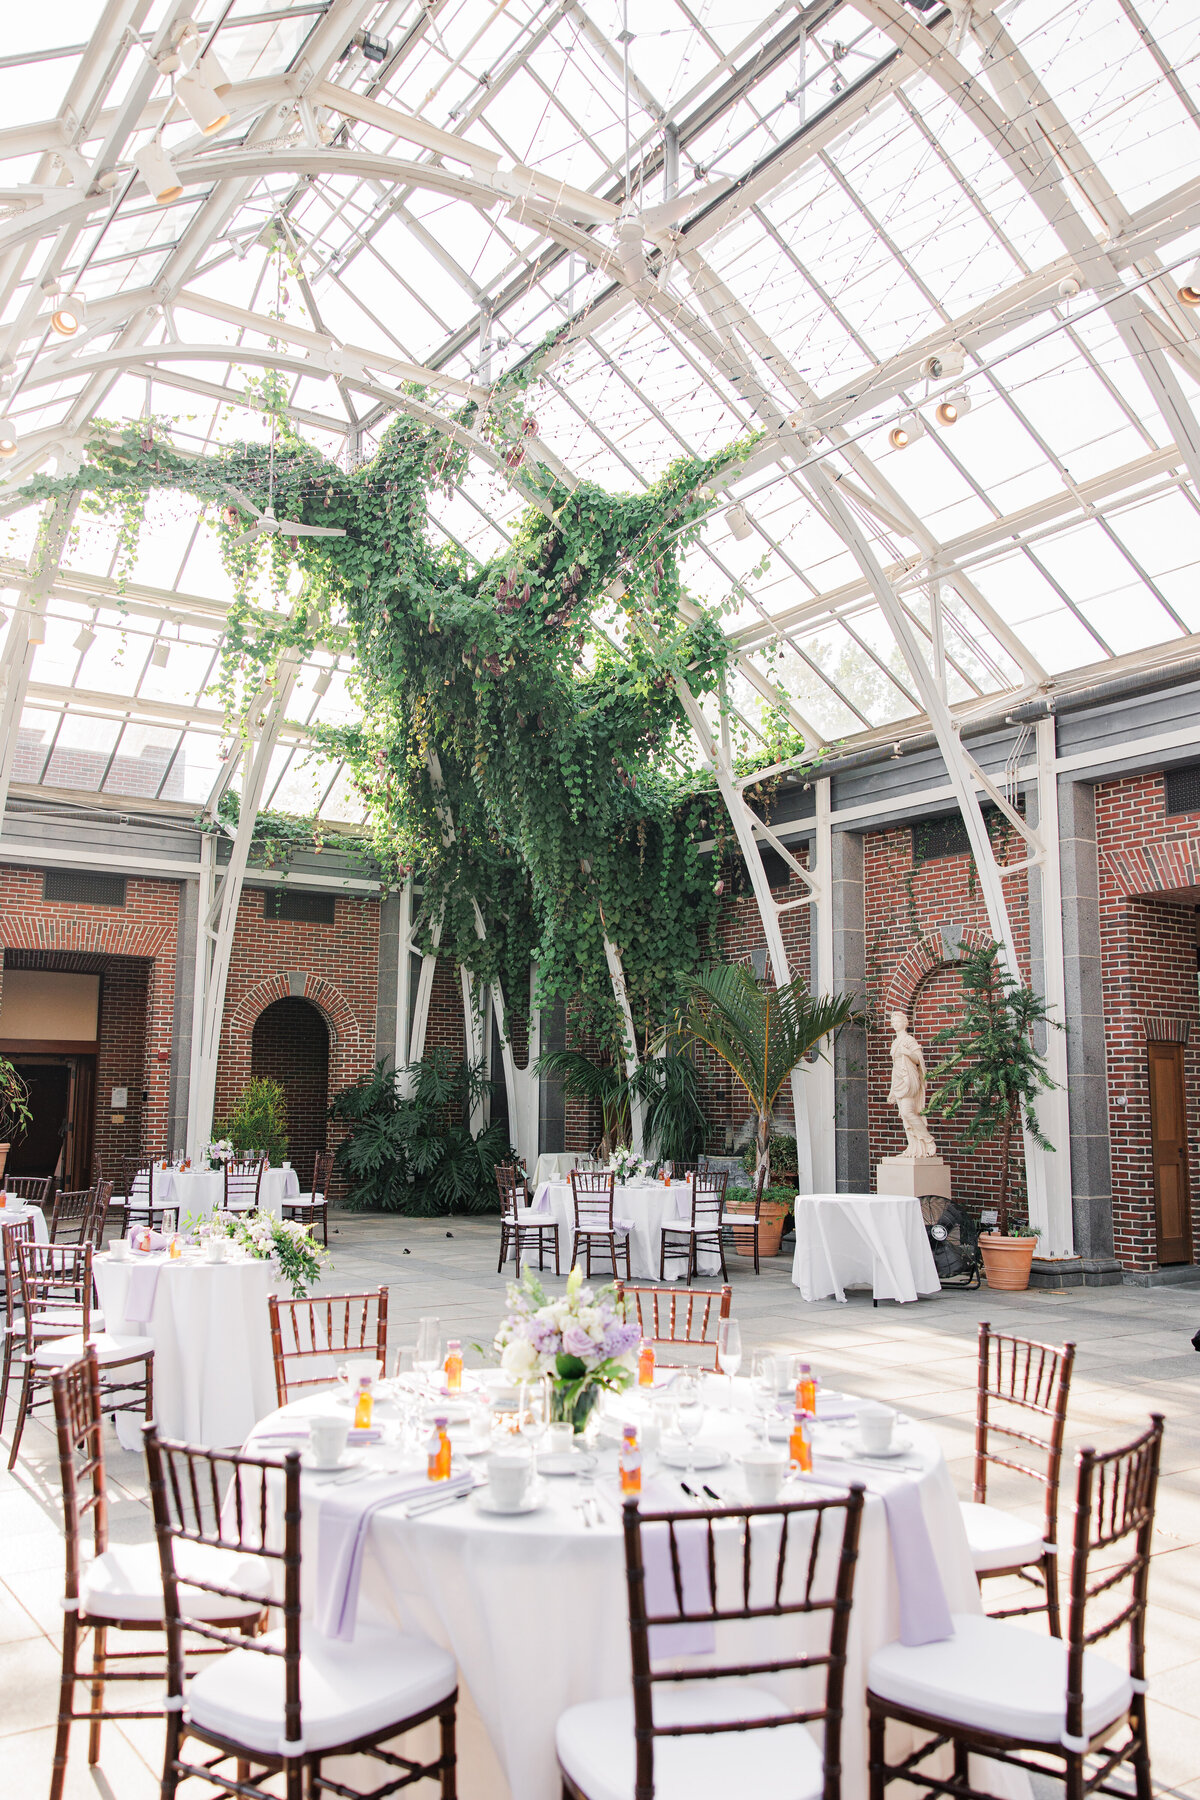 New England Botanic Garden at Tower Hill Orangerie set up for wedding reception